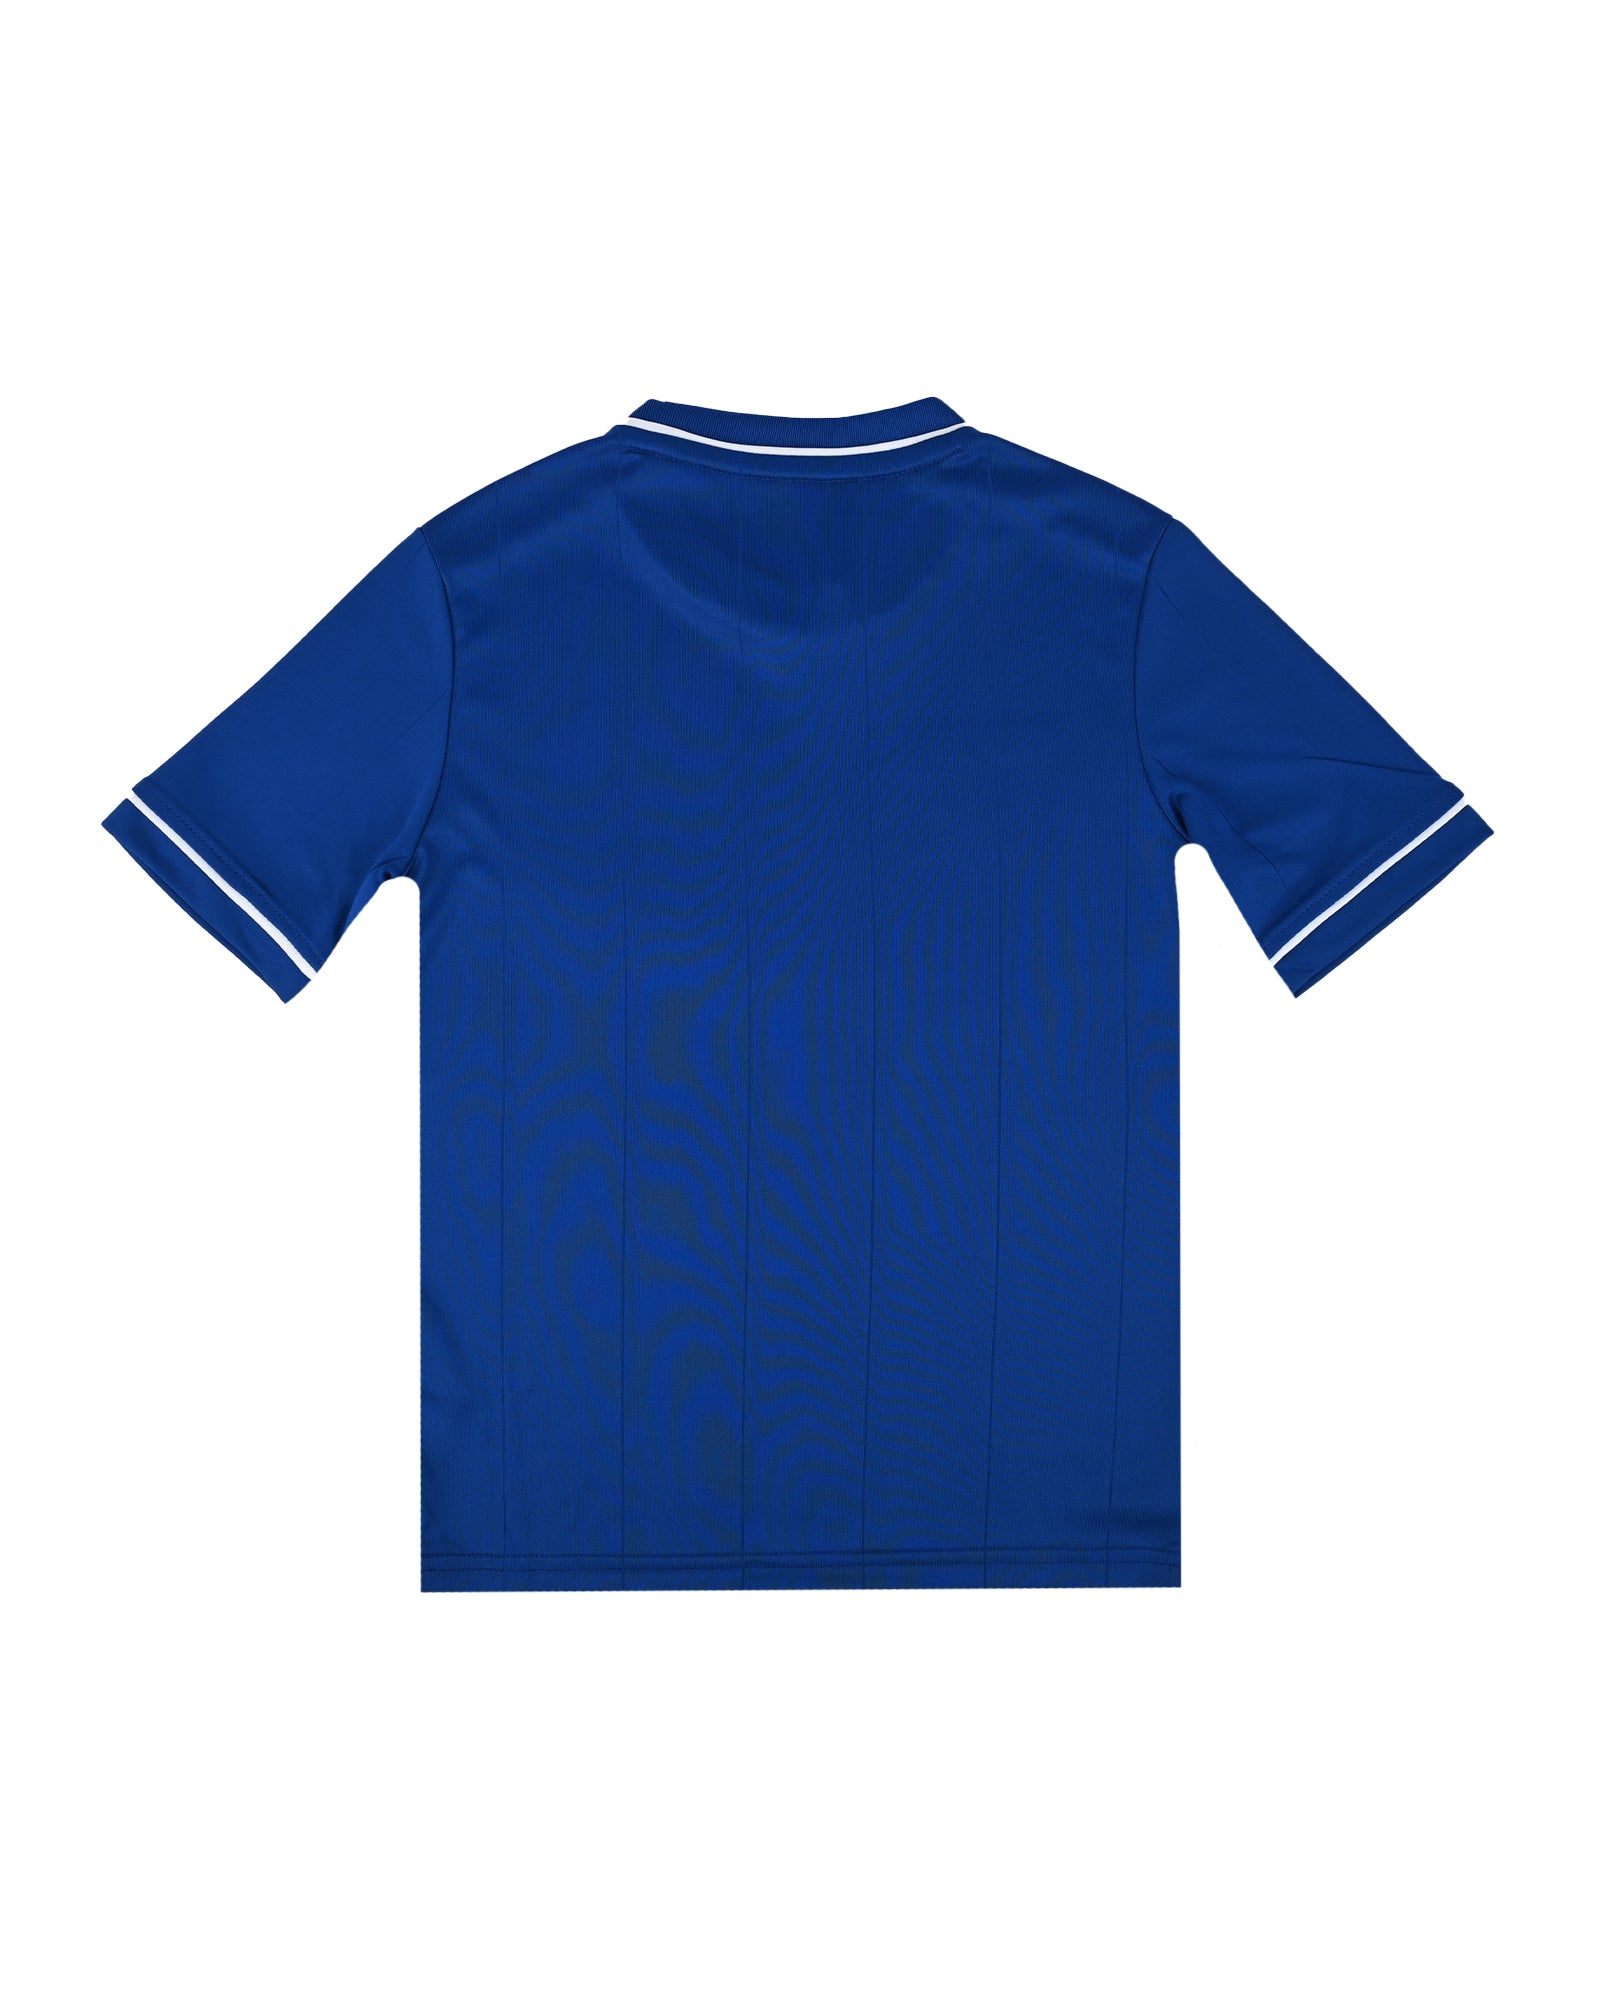 Boys Sports Half Sleeve T-Shirt: Comfortable and Stylish for Active Bo